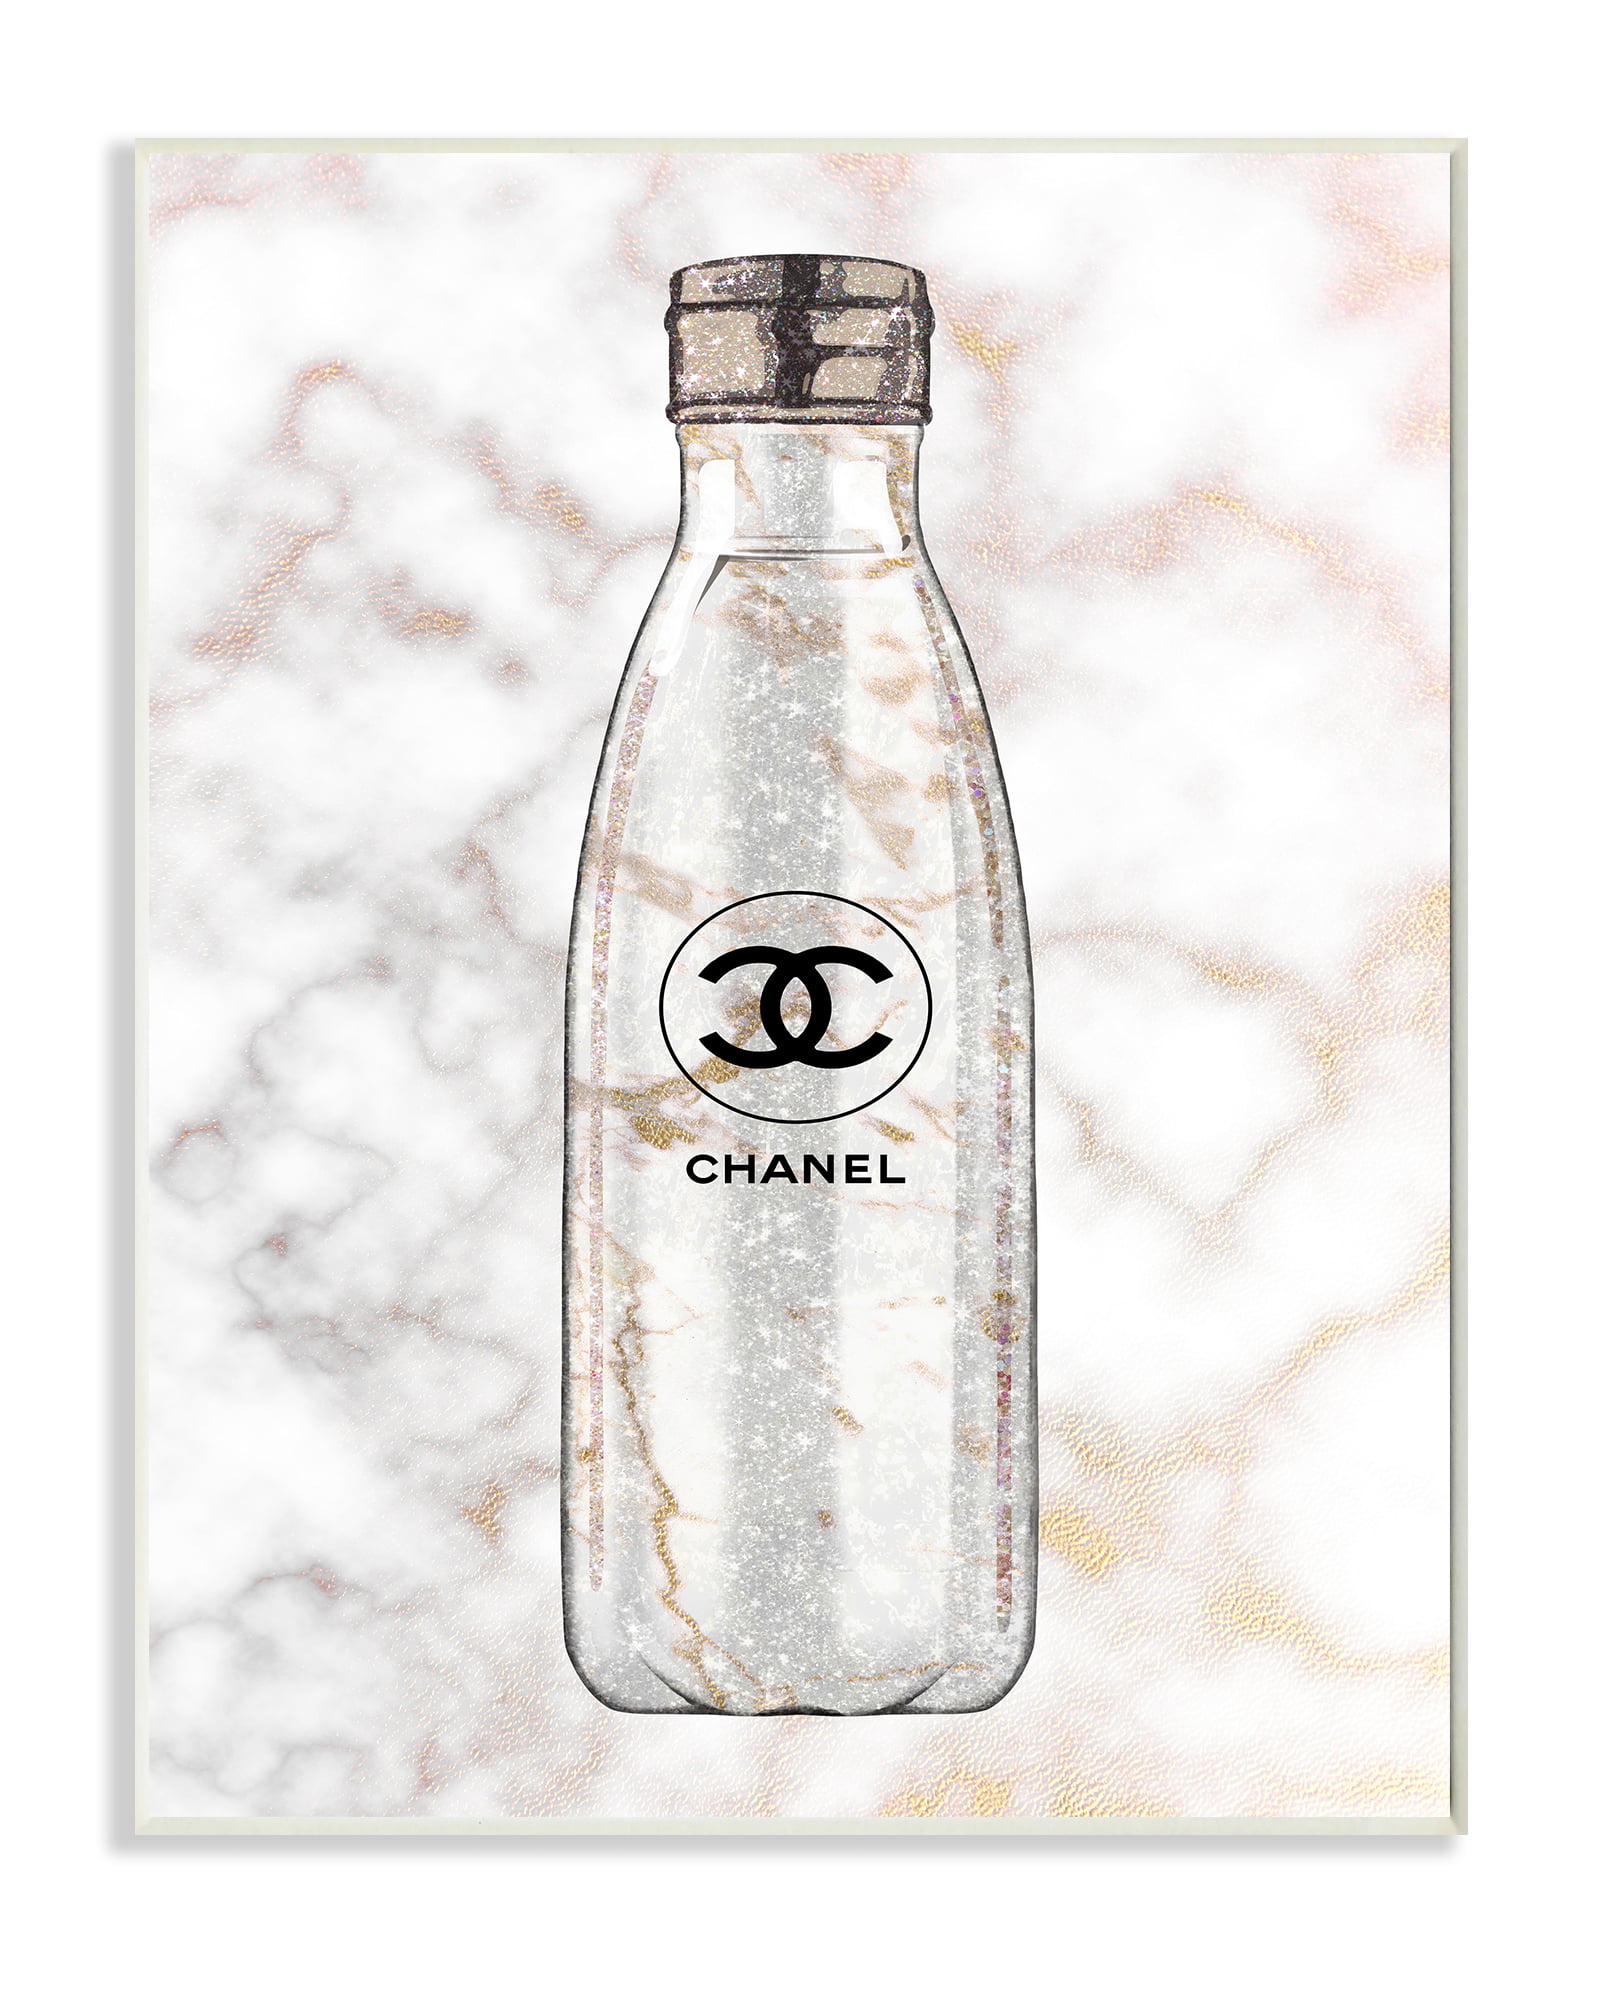 Glass Framed Keep Your Heels & Standards High Chanel Wall Art, 19